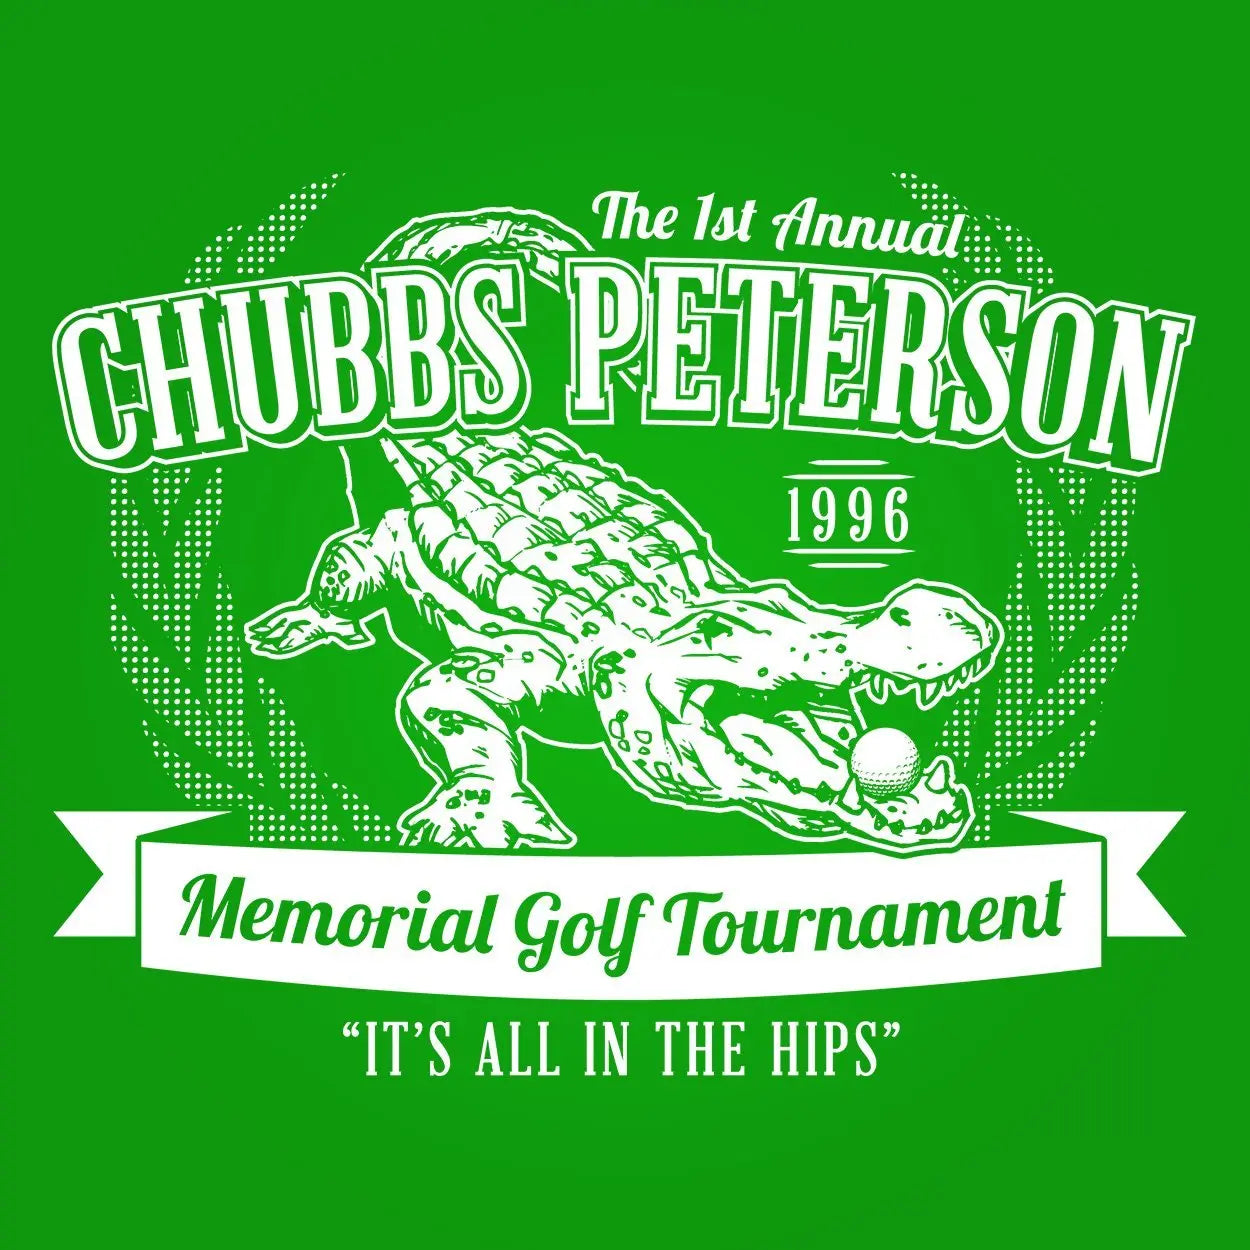 Chubbs Peterson Golf Memorial